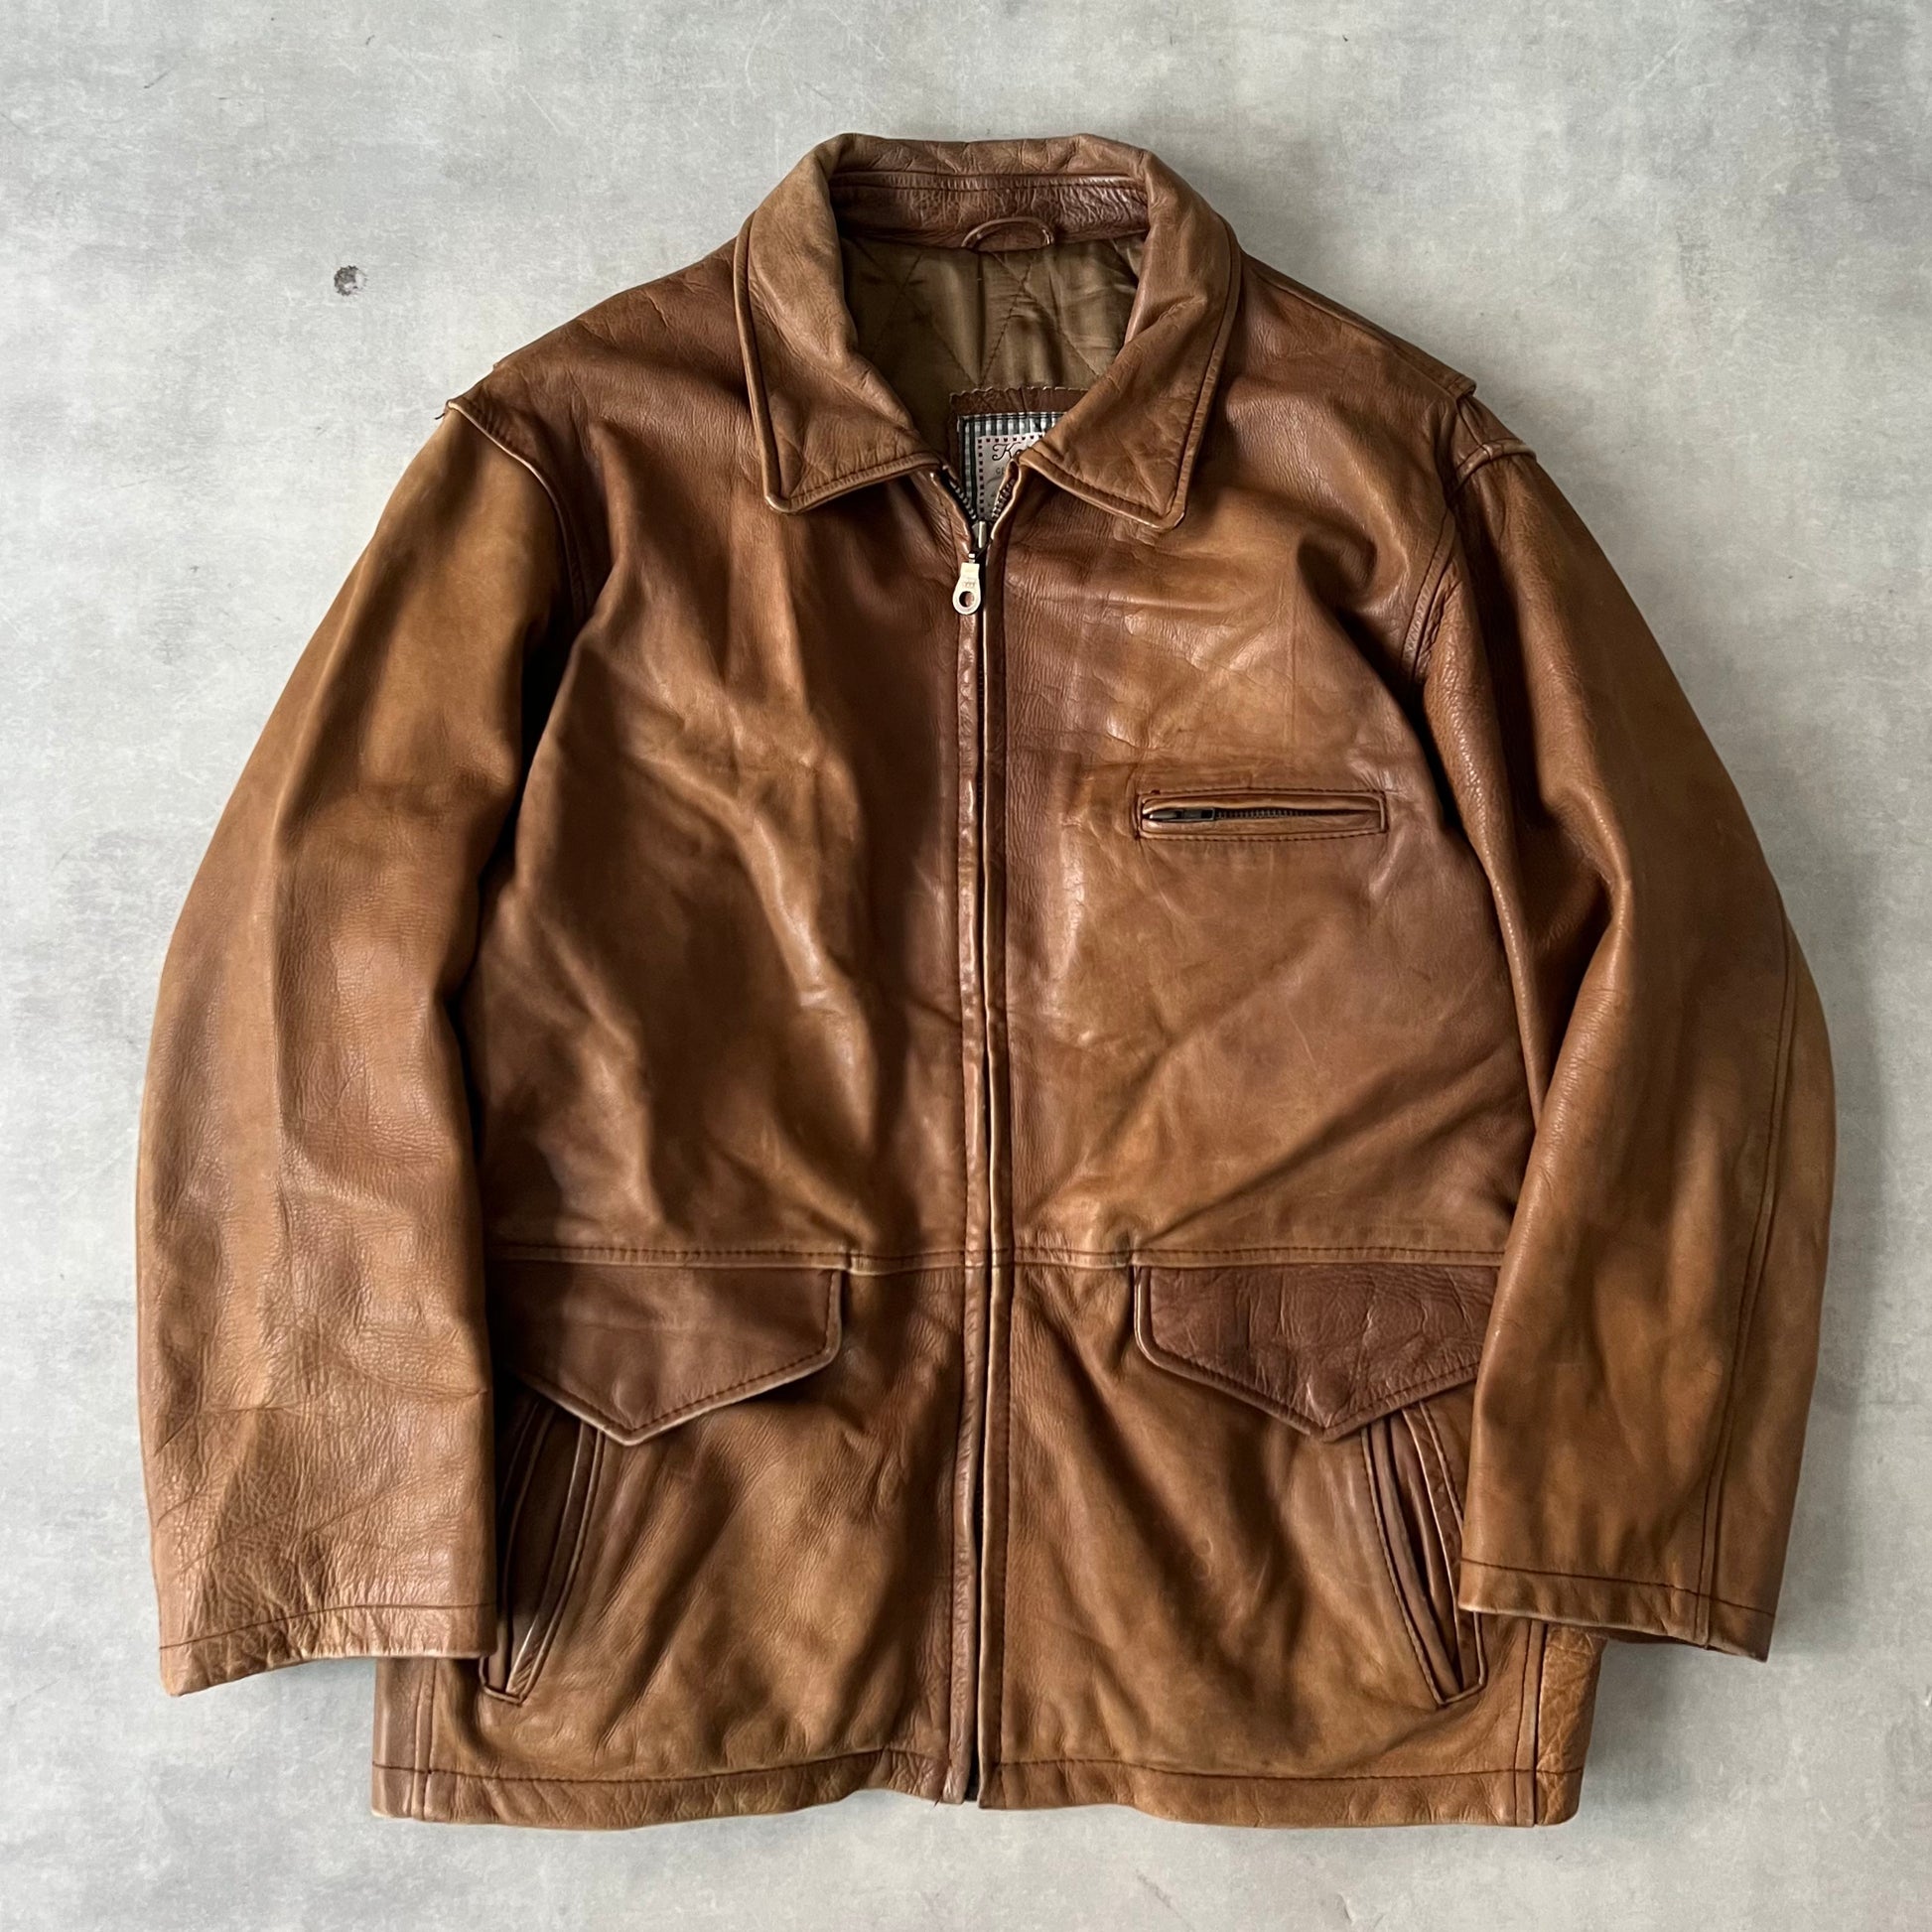 80's Konely leather jacket